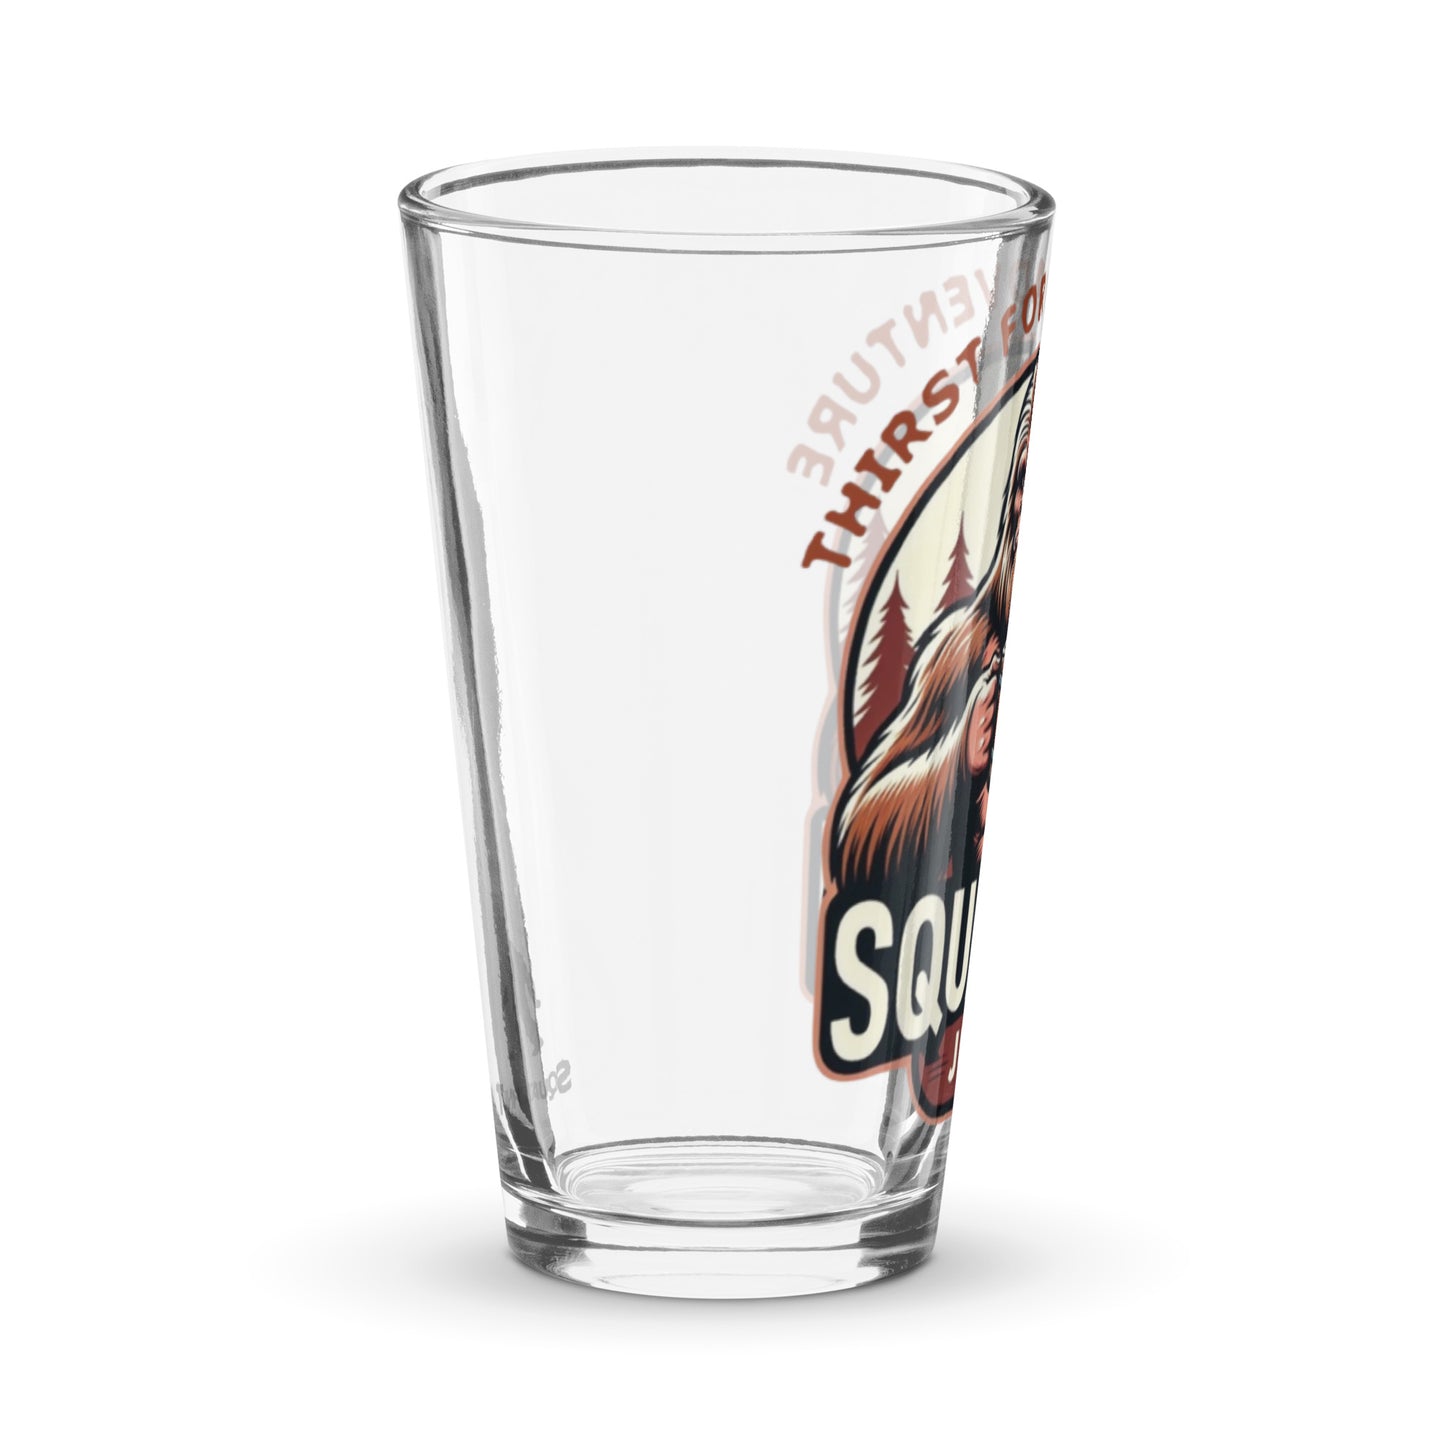 Squatch Juice Shaker pint glass